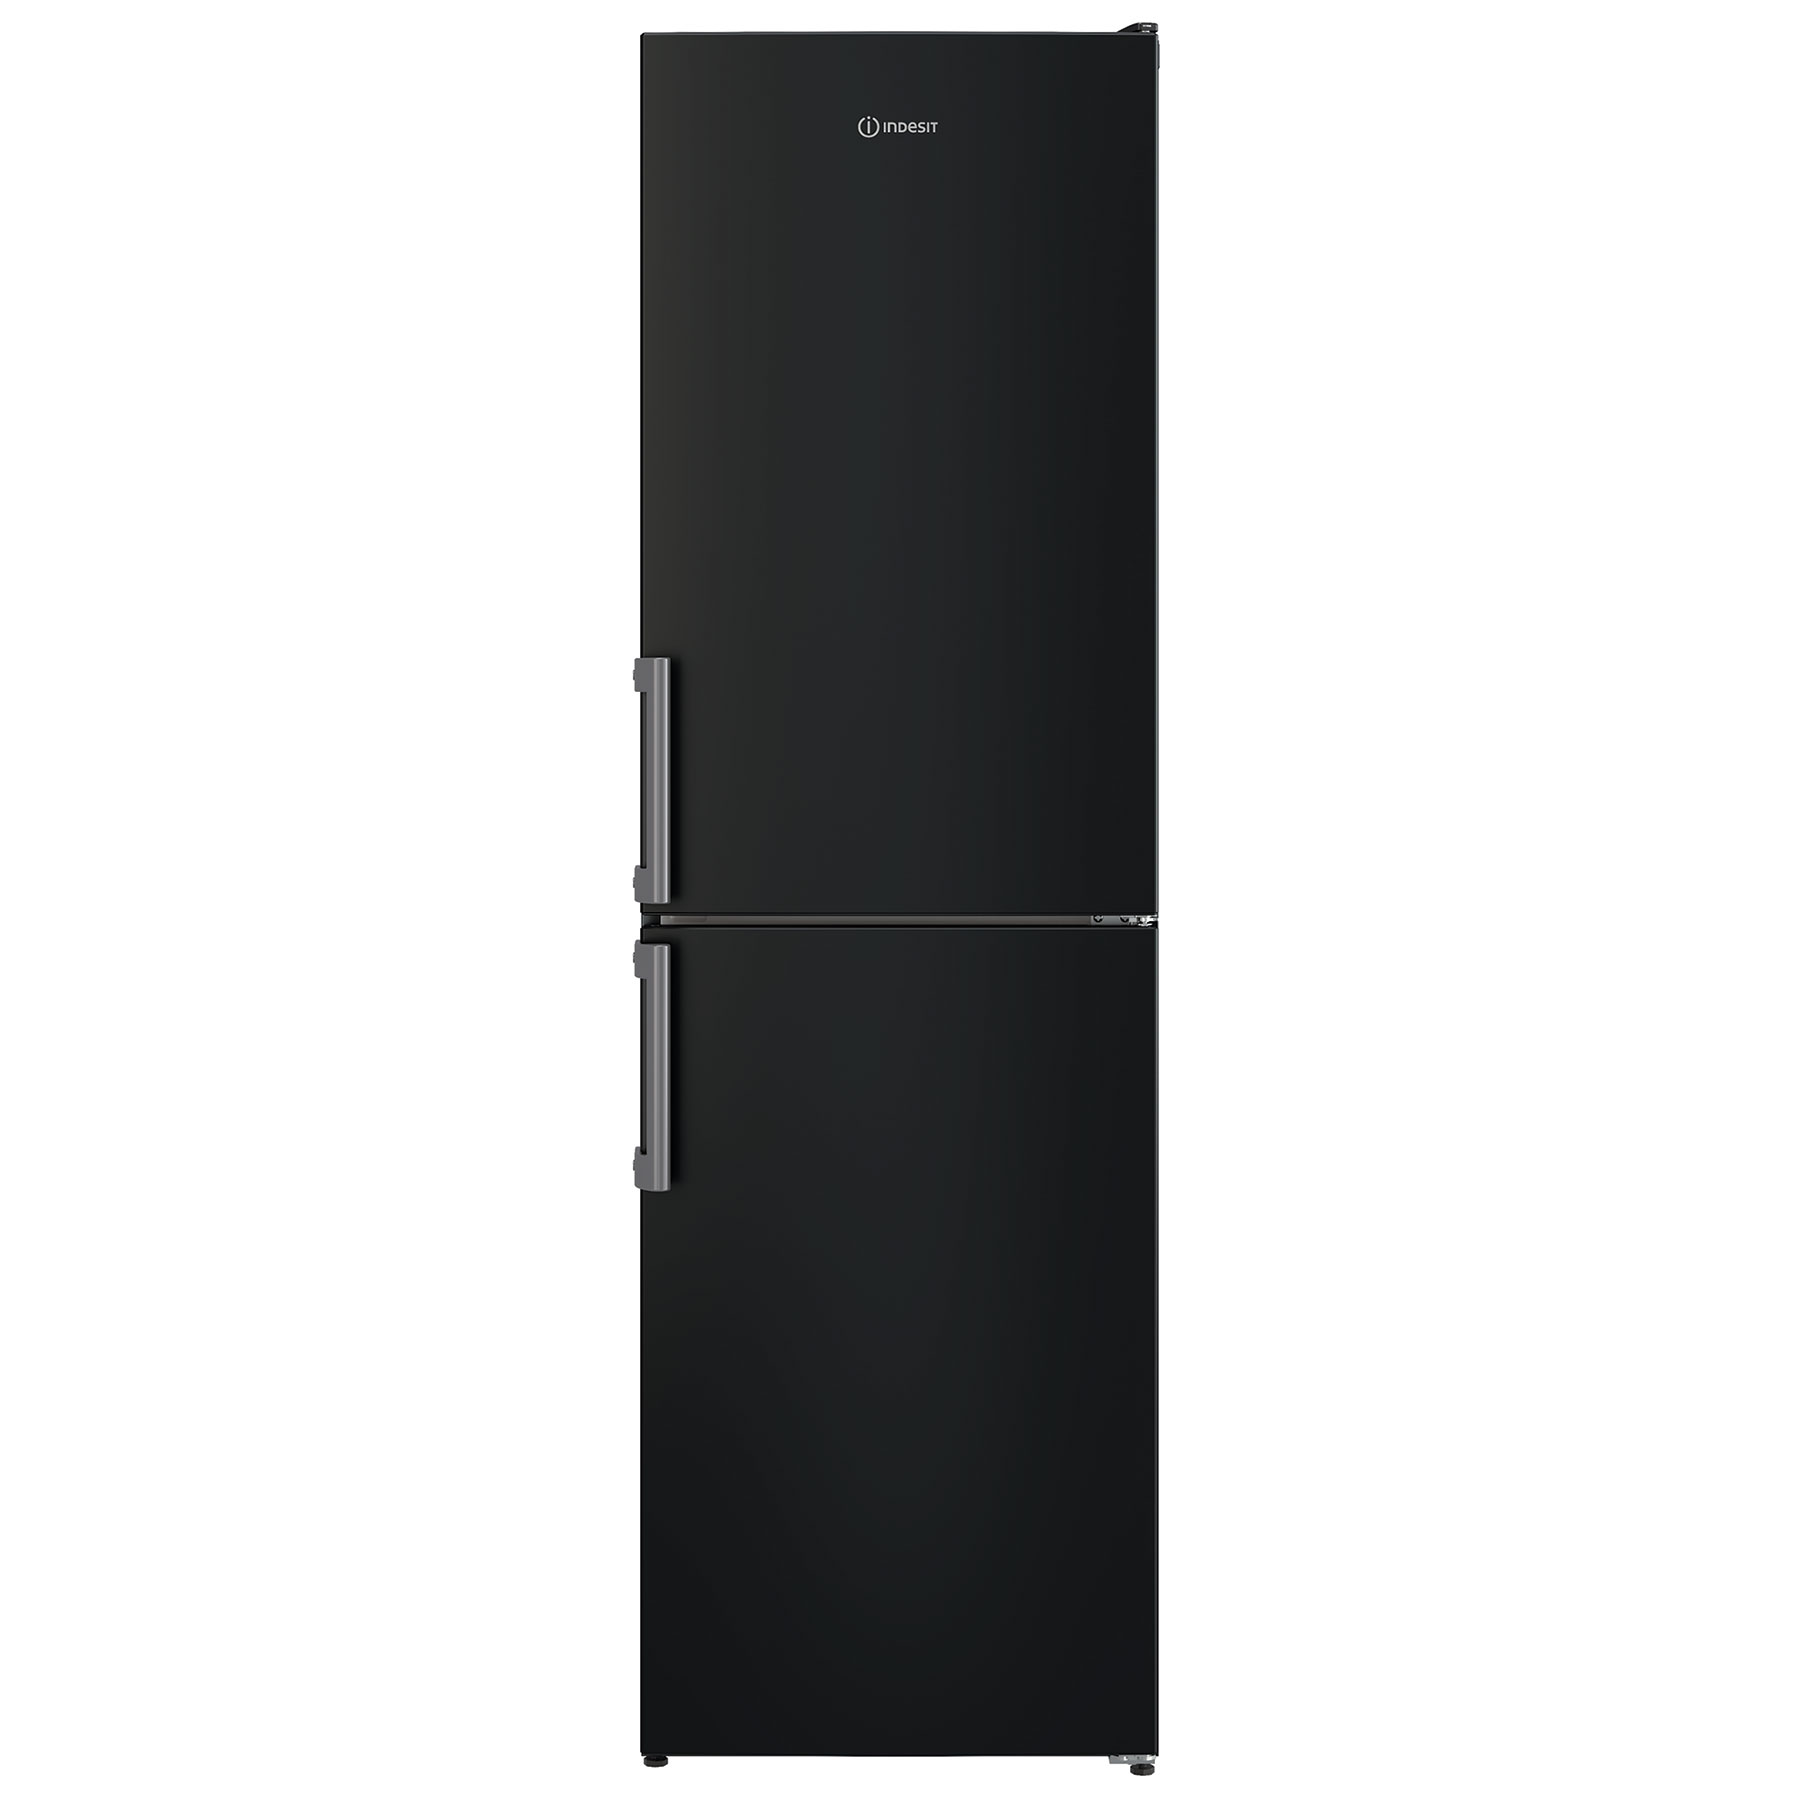 Image of Indesit IB55732BUK 55cm Fridge Freezer in Black 1 83m E Rated 168 119L